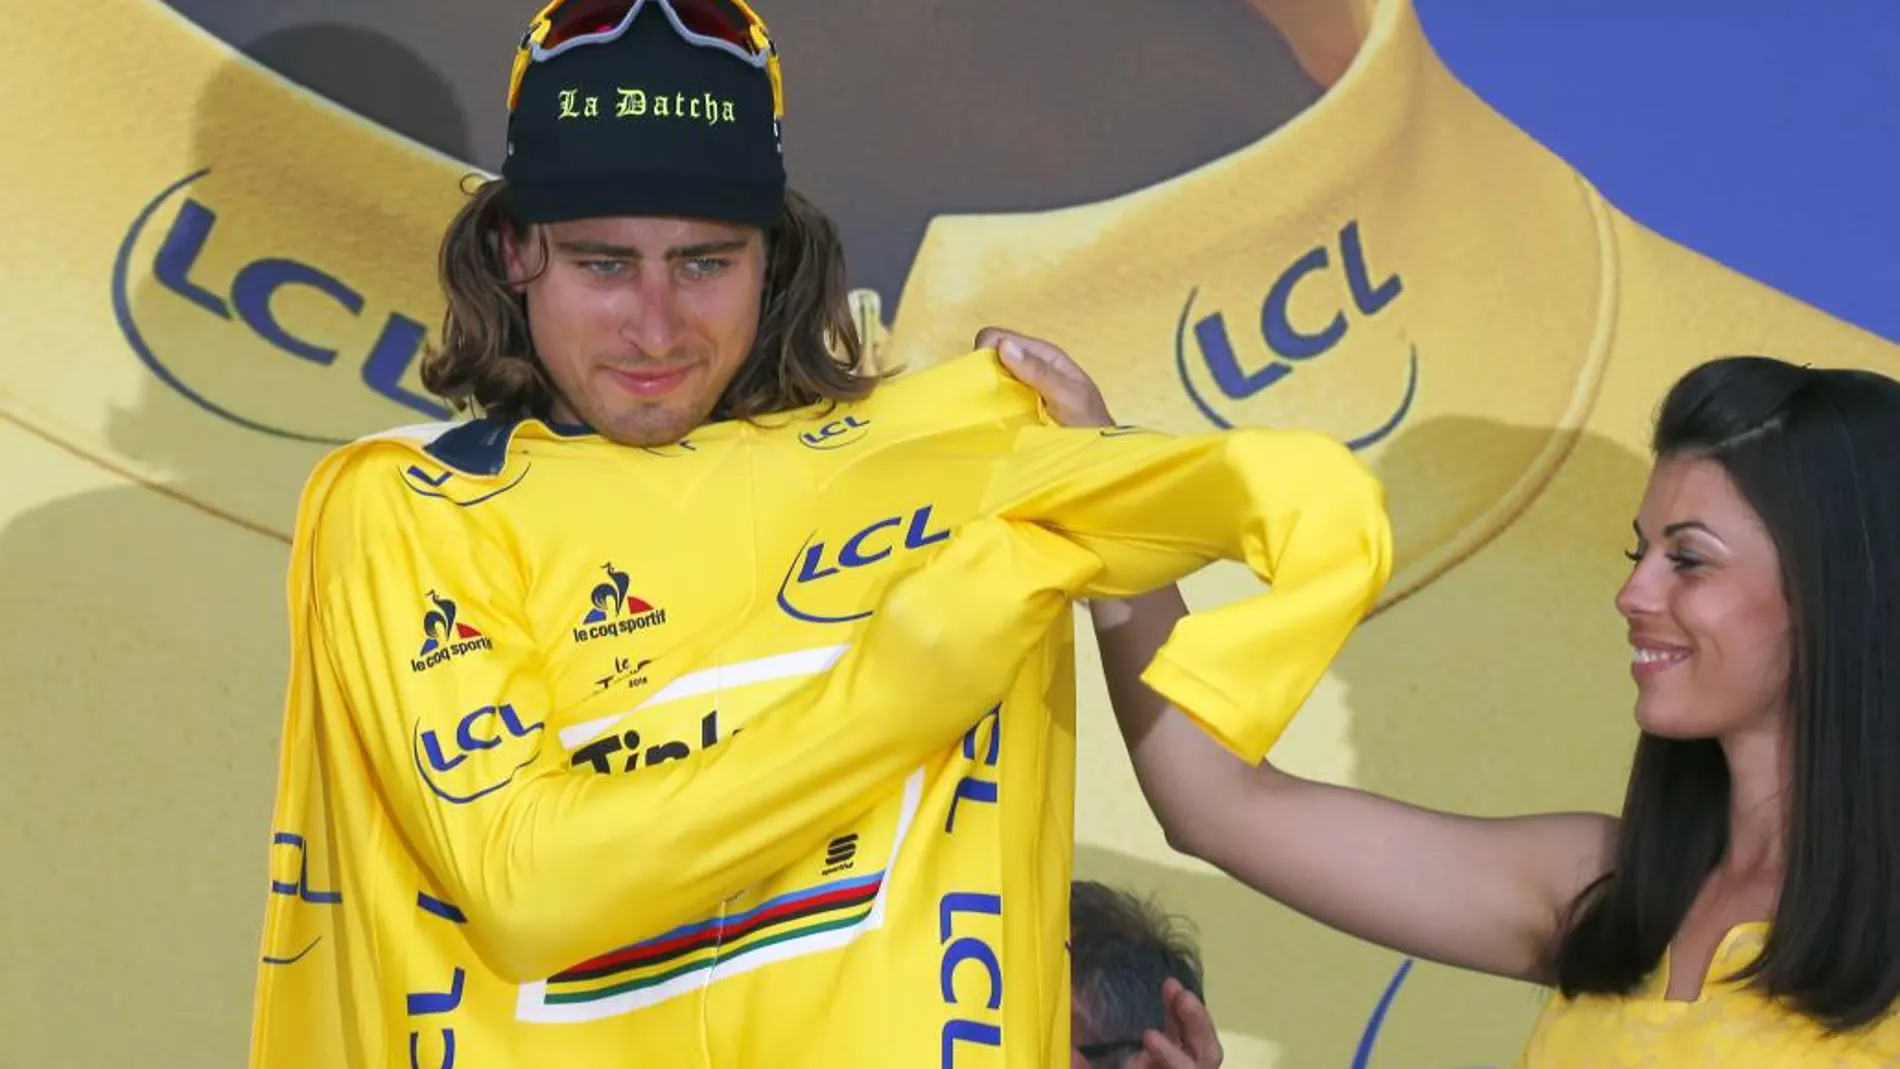 El eslovaco Peter Sagan se coloca el maillot amarillo de líder del Tour.